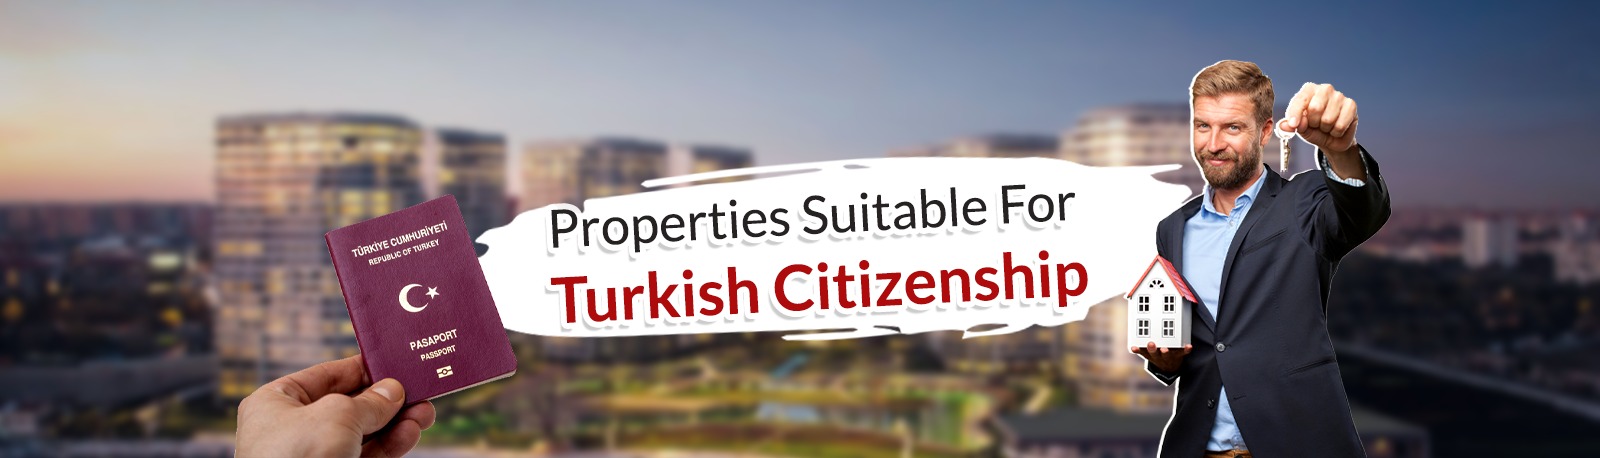 Properties Suitable For Turkish Citizenship